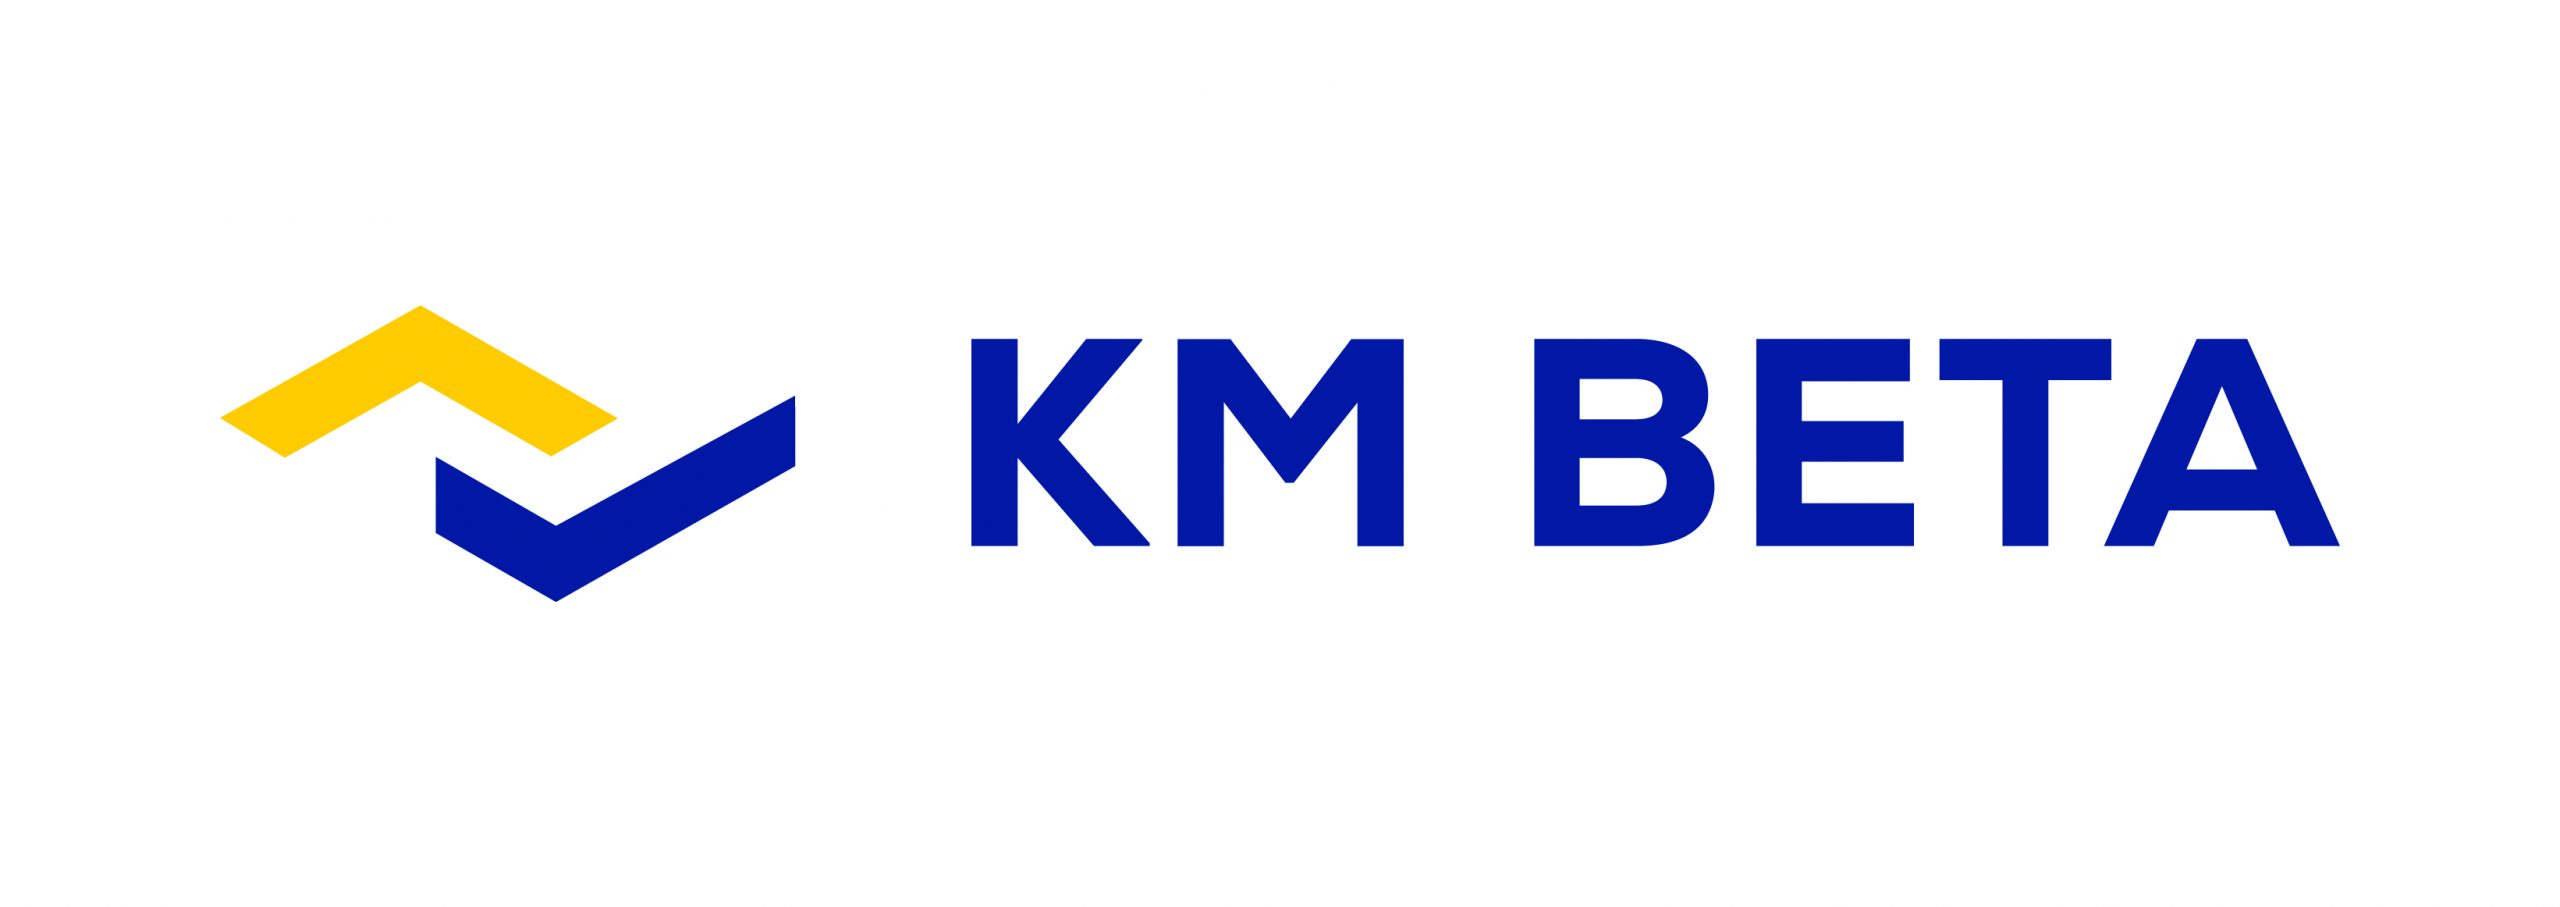 Logo KM BETA 